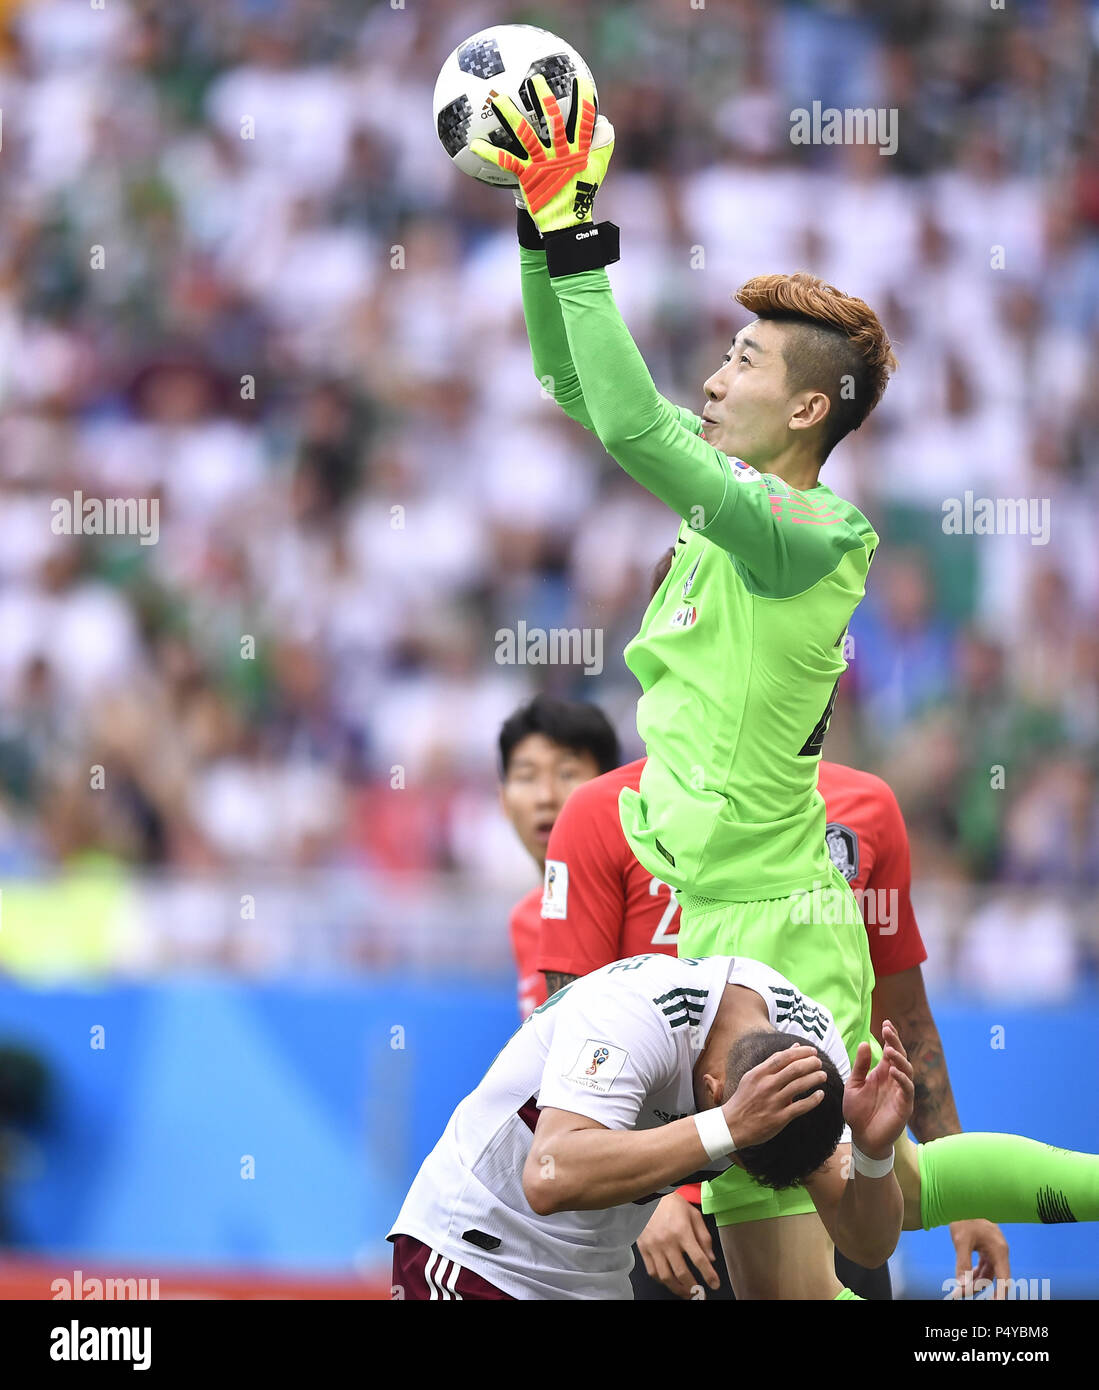 South korea goalkeeper immagini e fotografie stock ad alta risoluzione -  Alamy